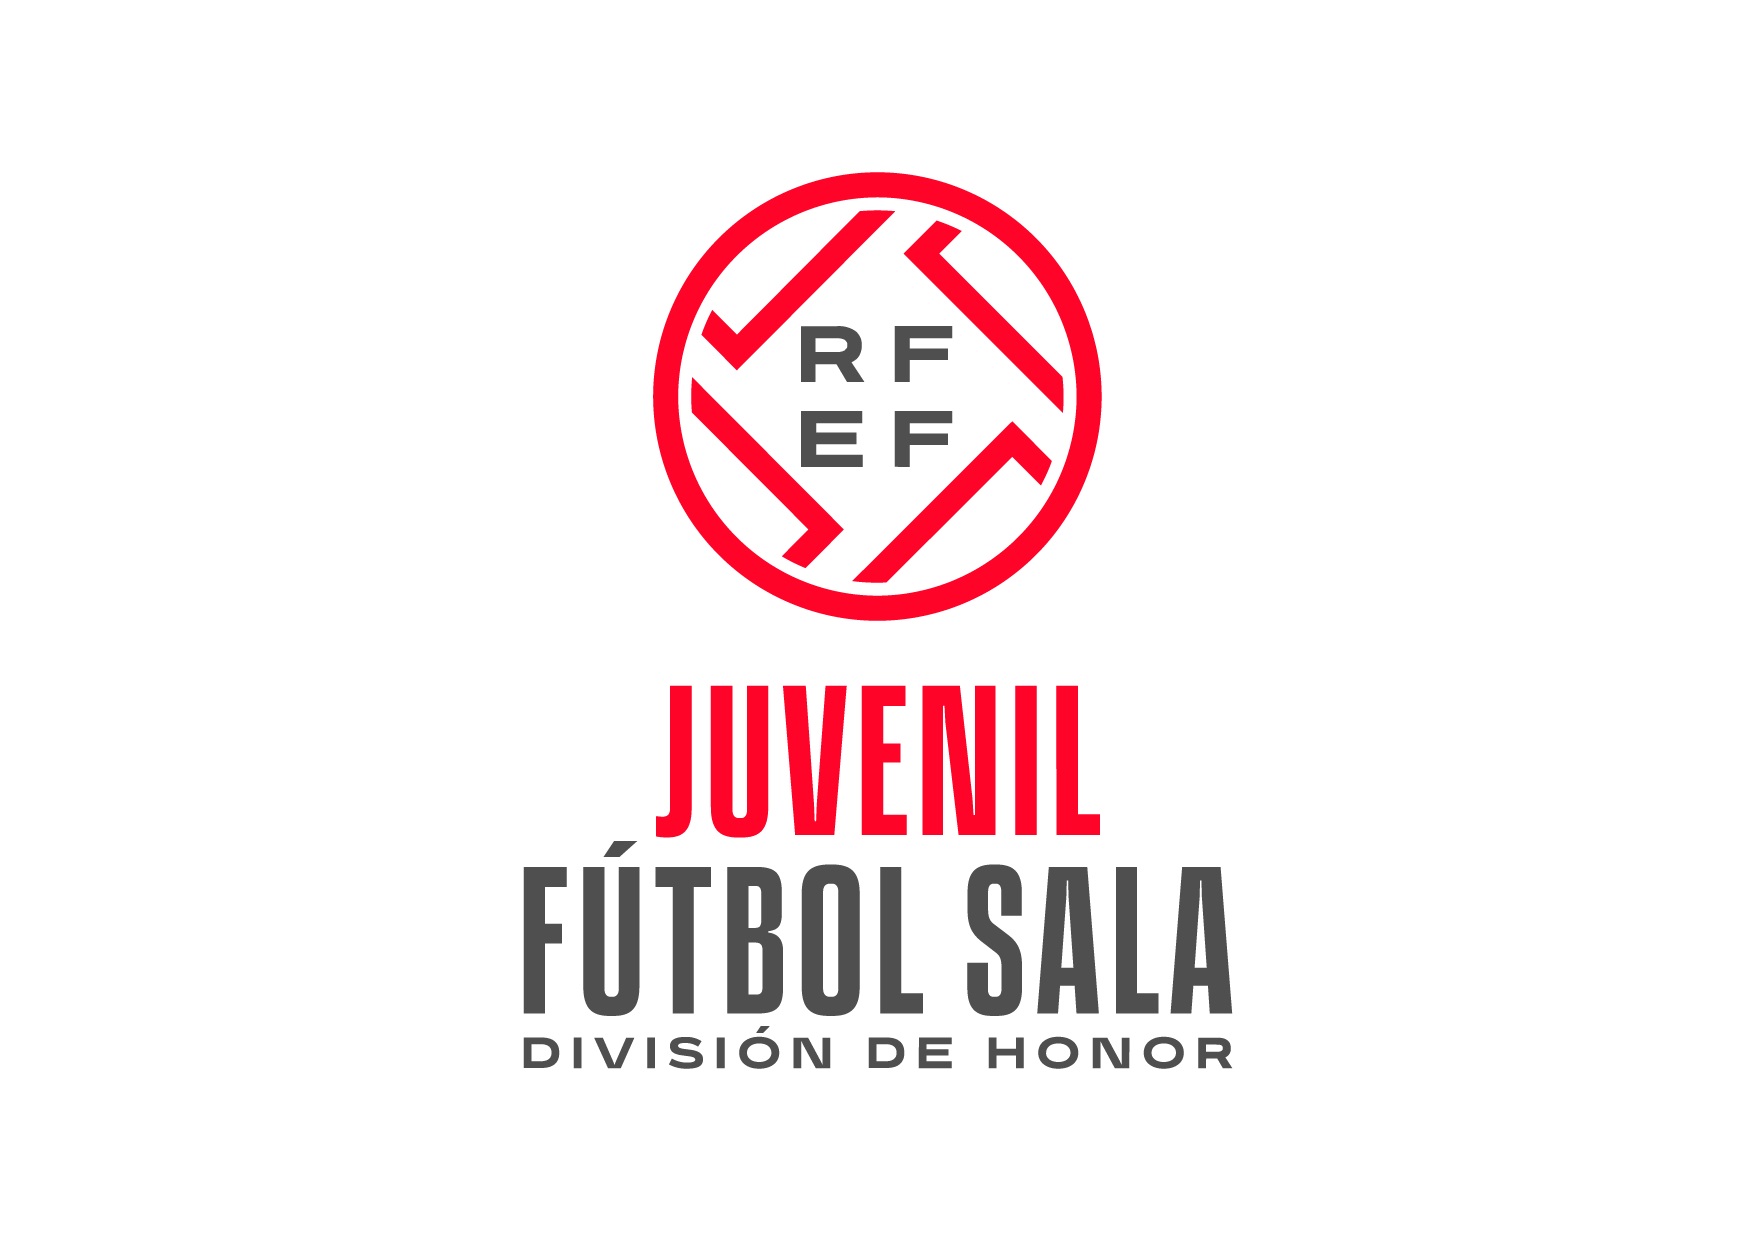 division_de_honor_juvenil_futsal